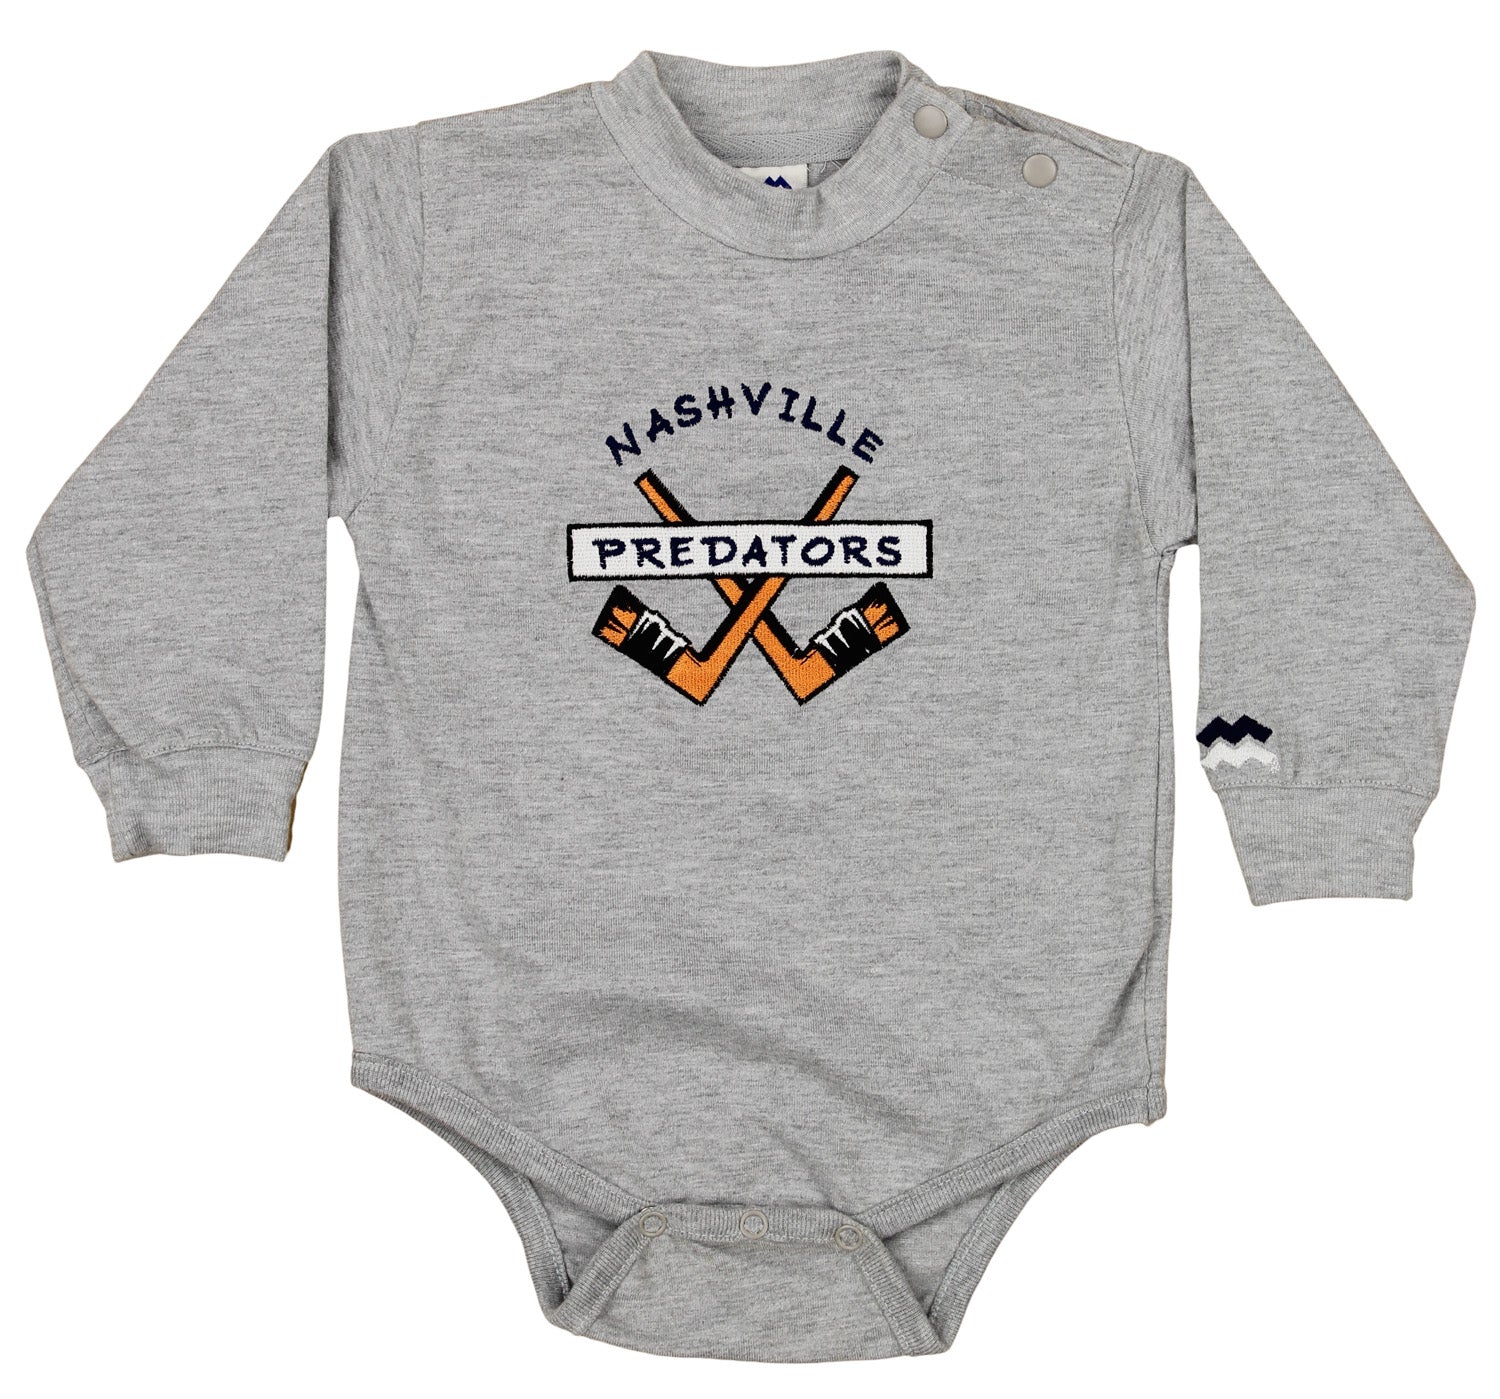 Outerstuff Nashville Predators NHL Baby Boys Infant Creeper & Pants Set, Grey-Navy